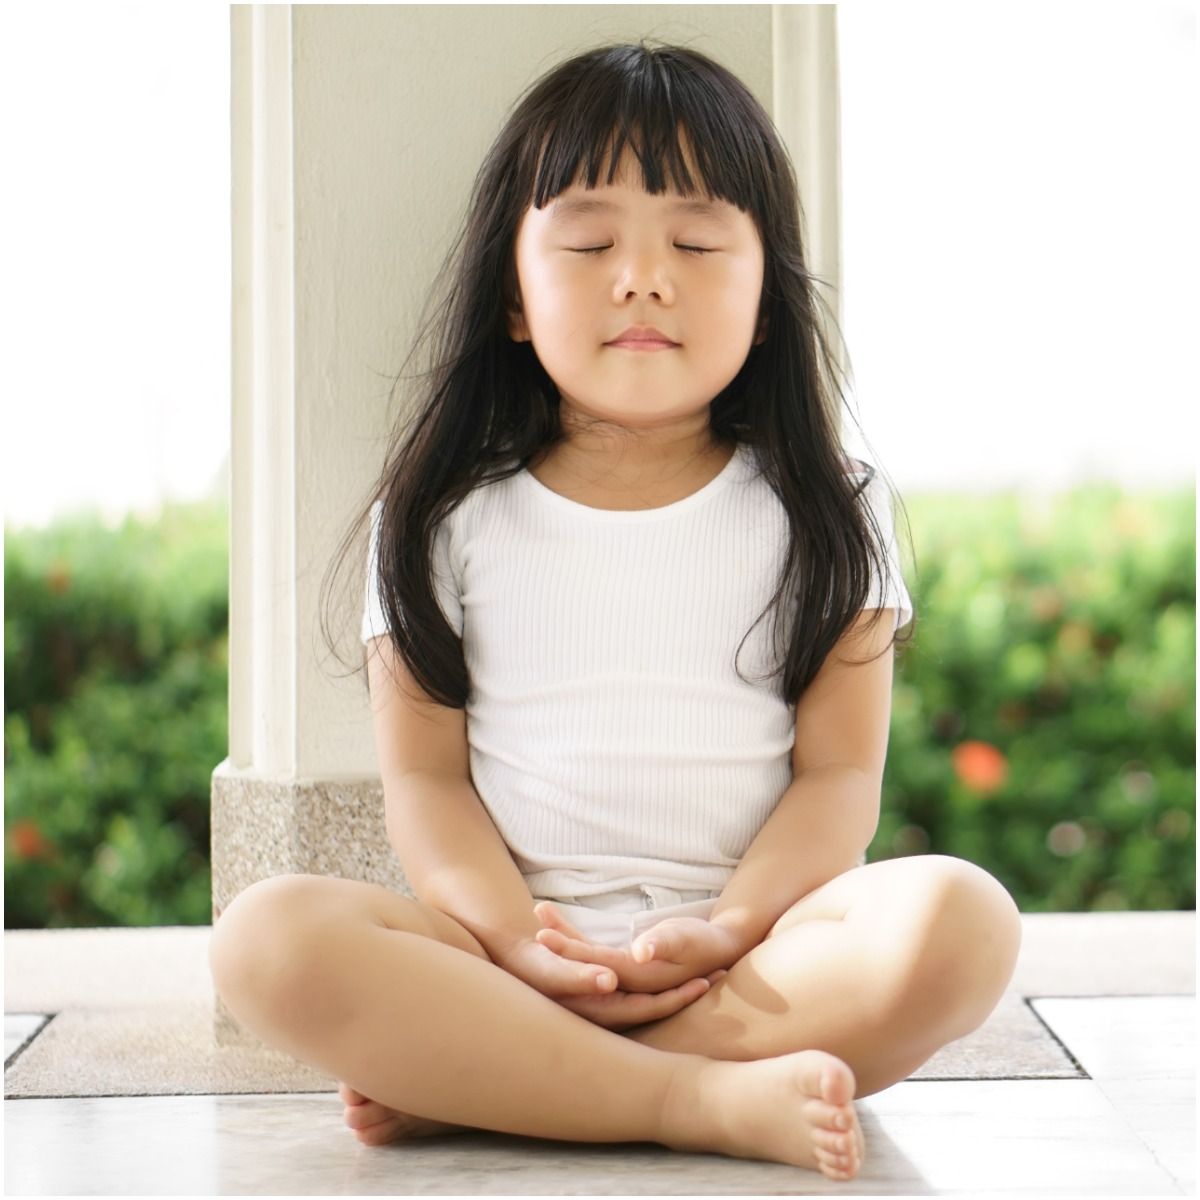 a young girl meditation children